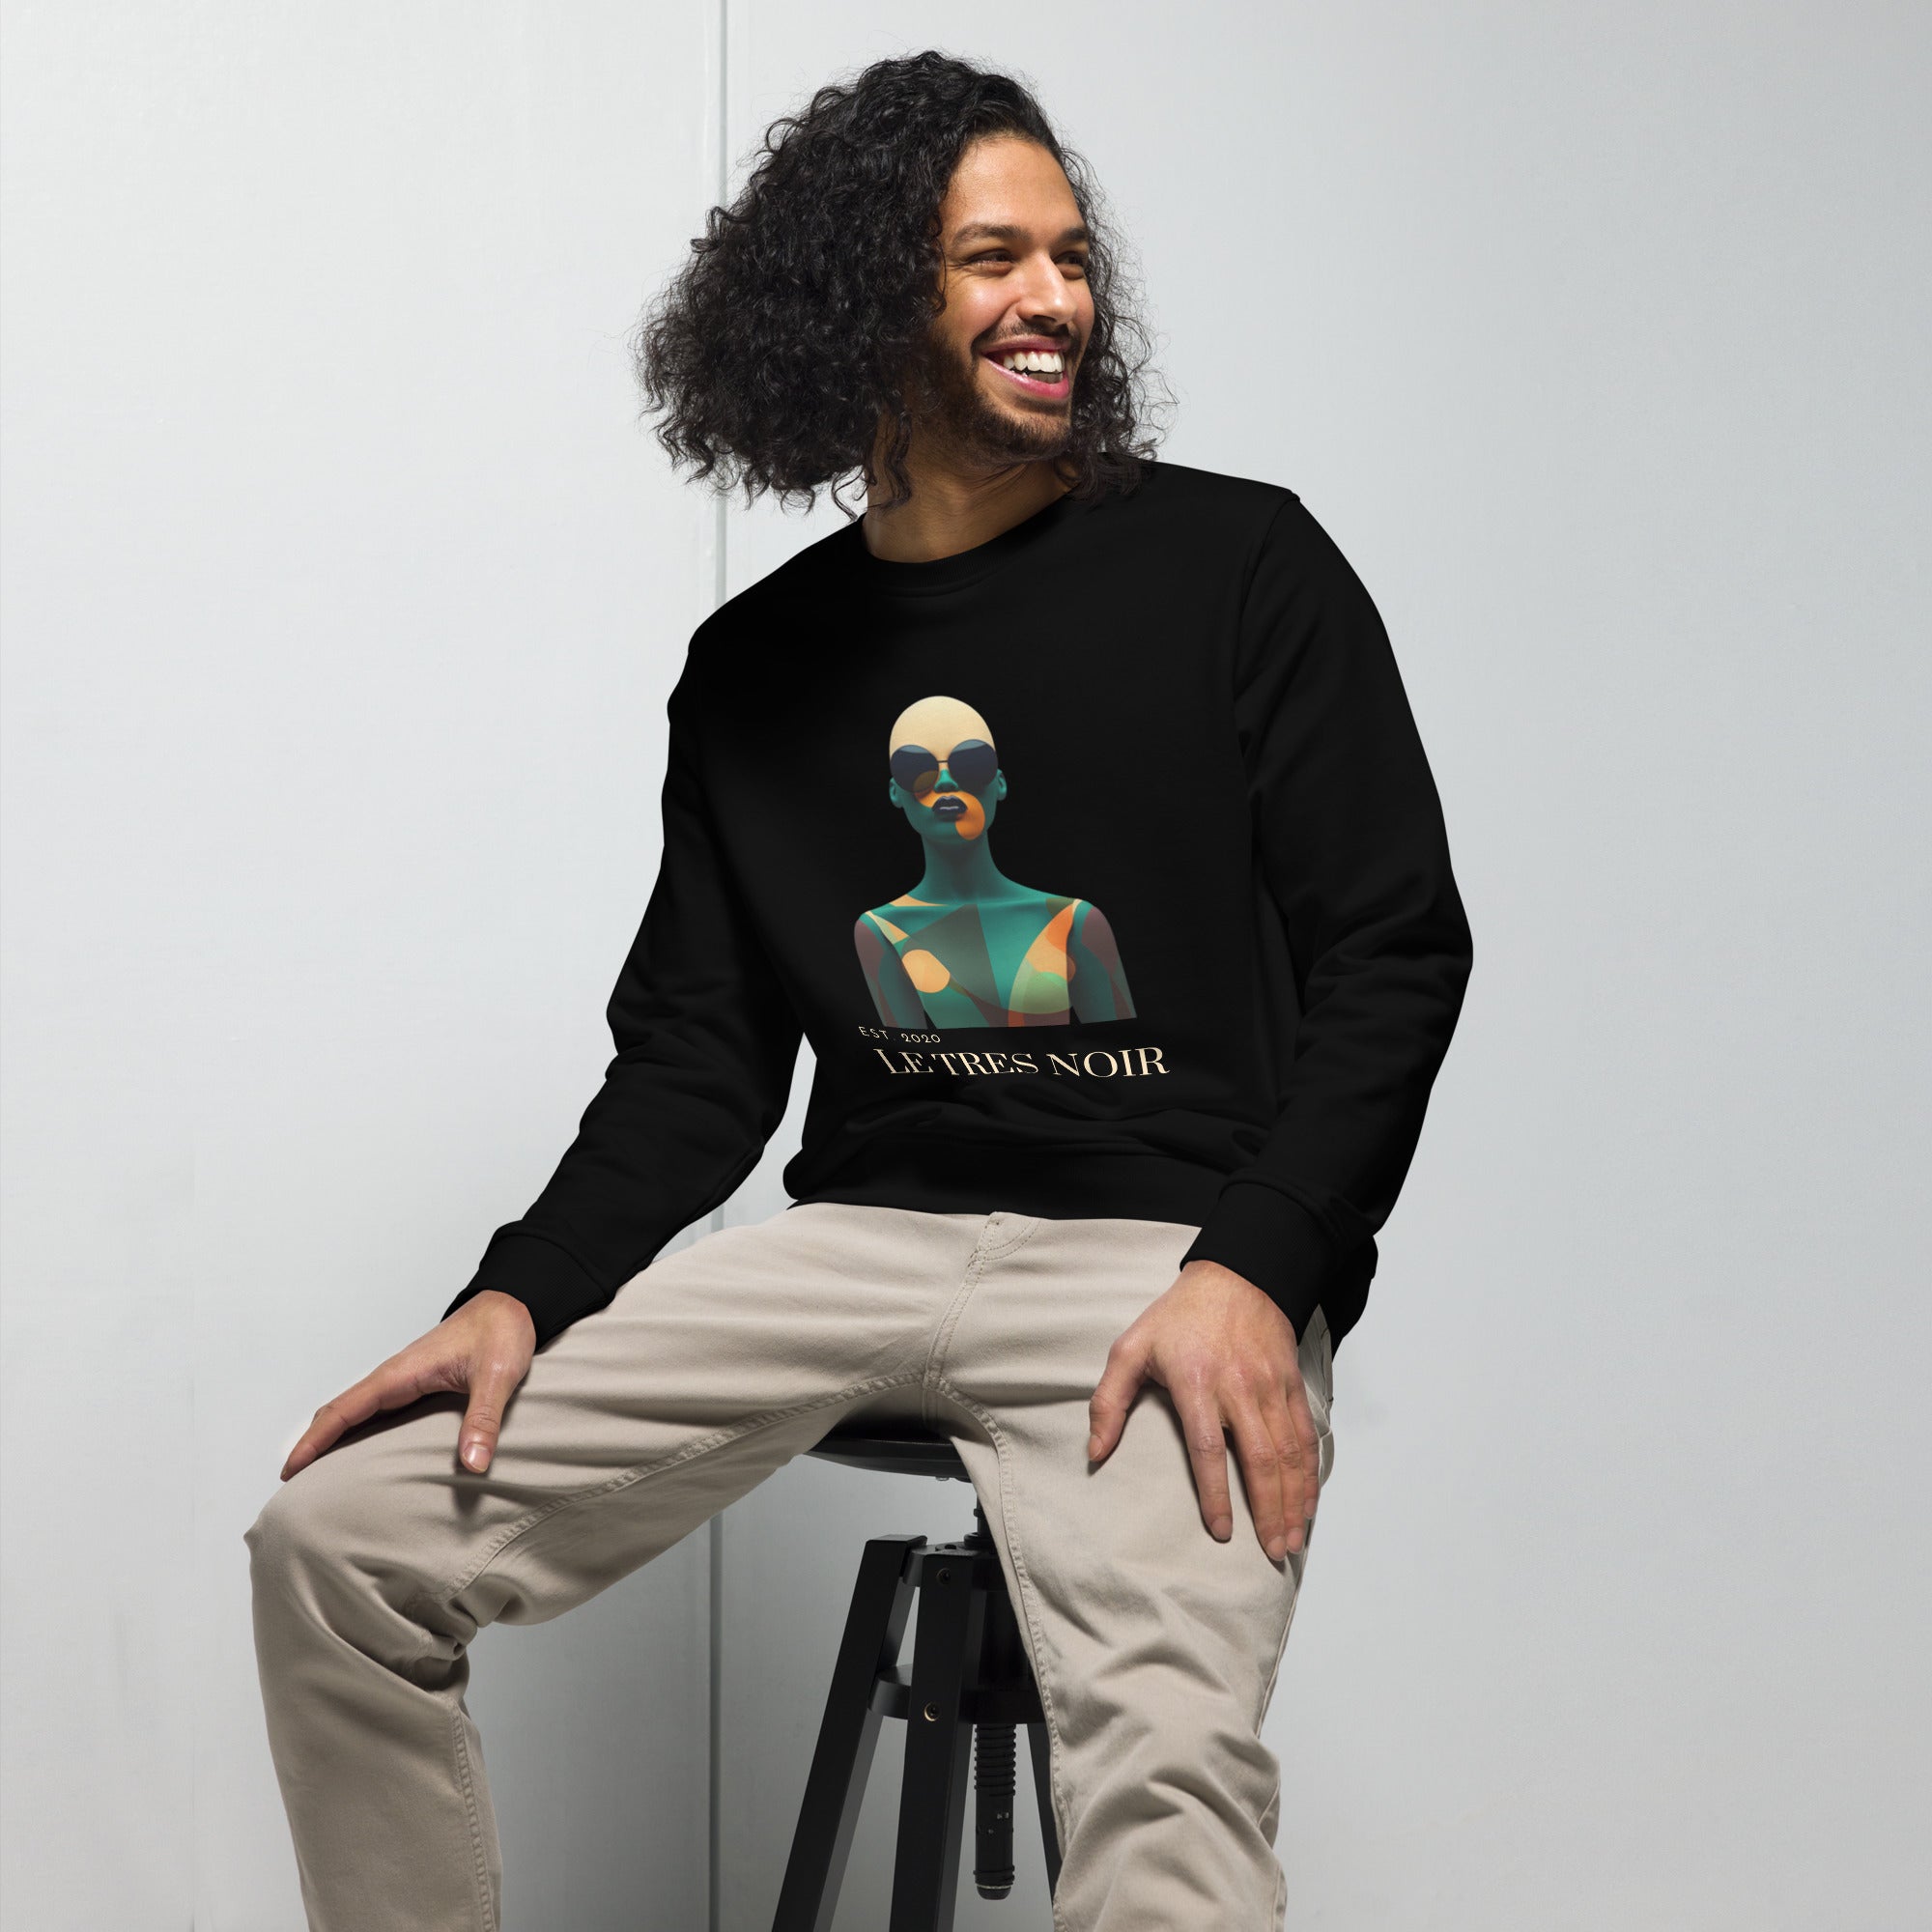 Le Tre Noir "First Contact" Unisex organic sweatshirt